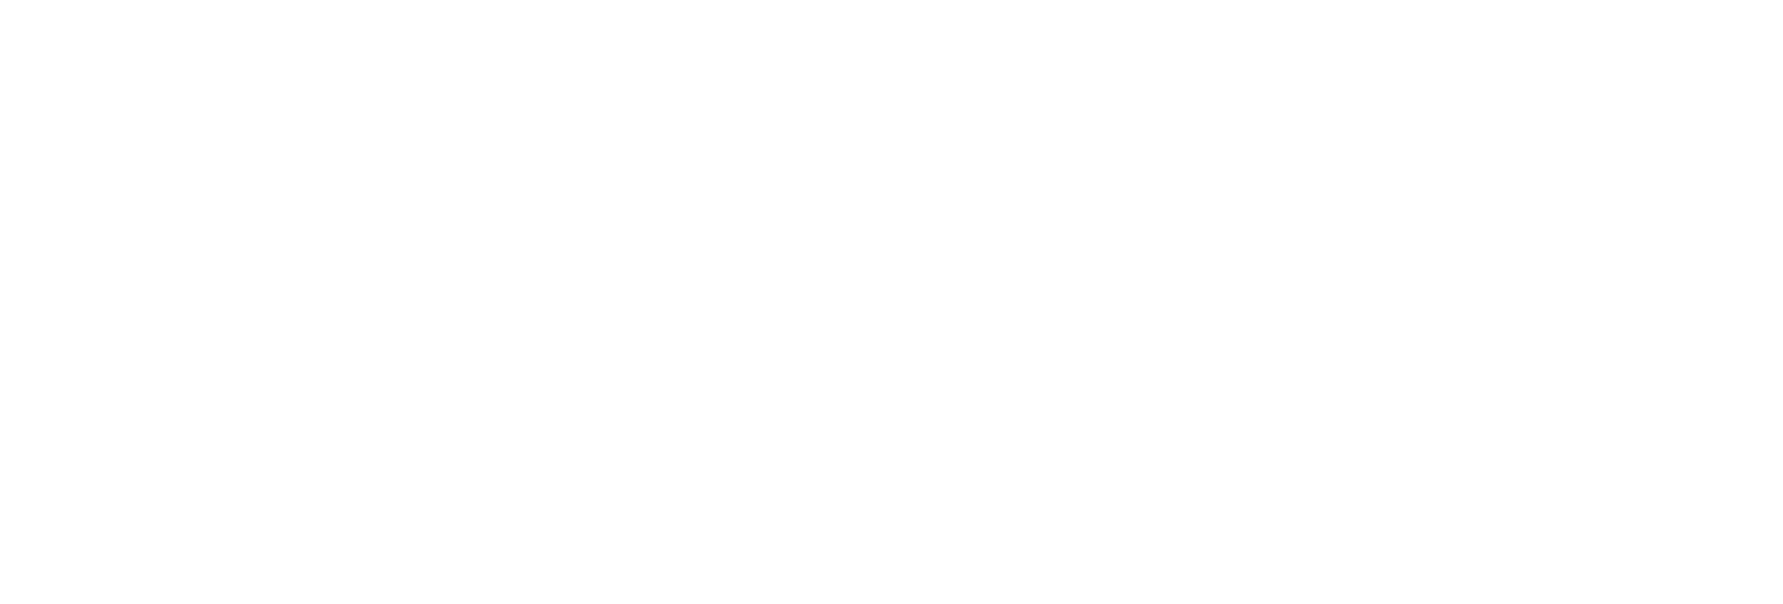 LeanScape Logo White